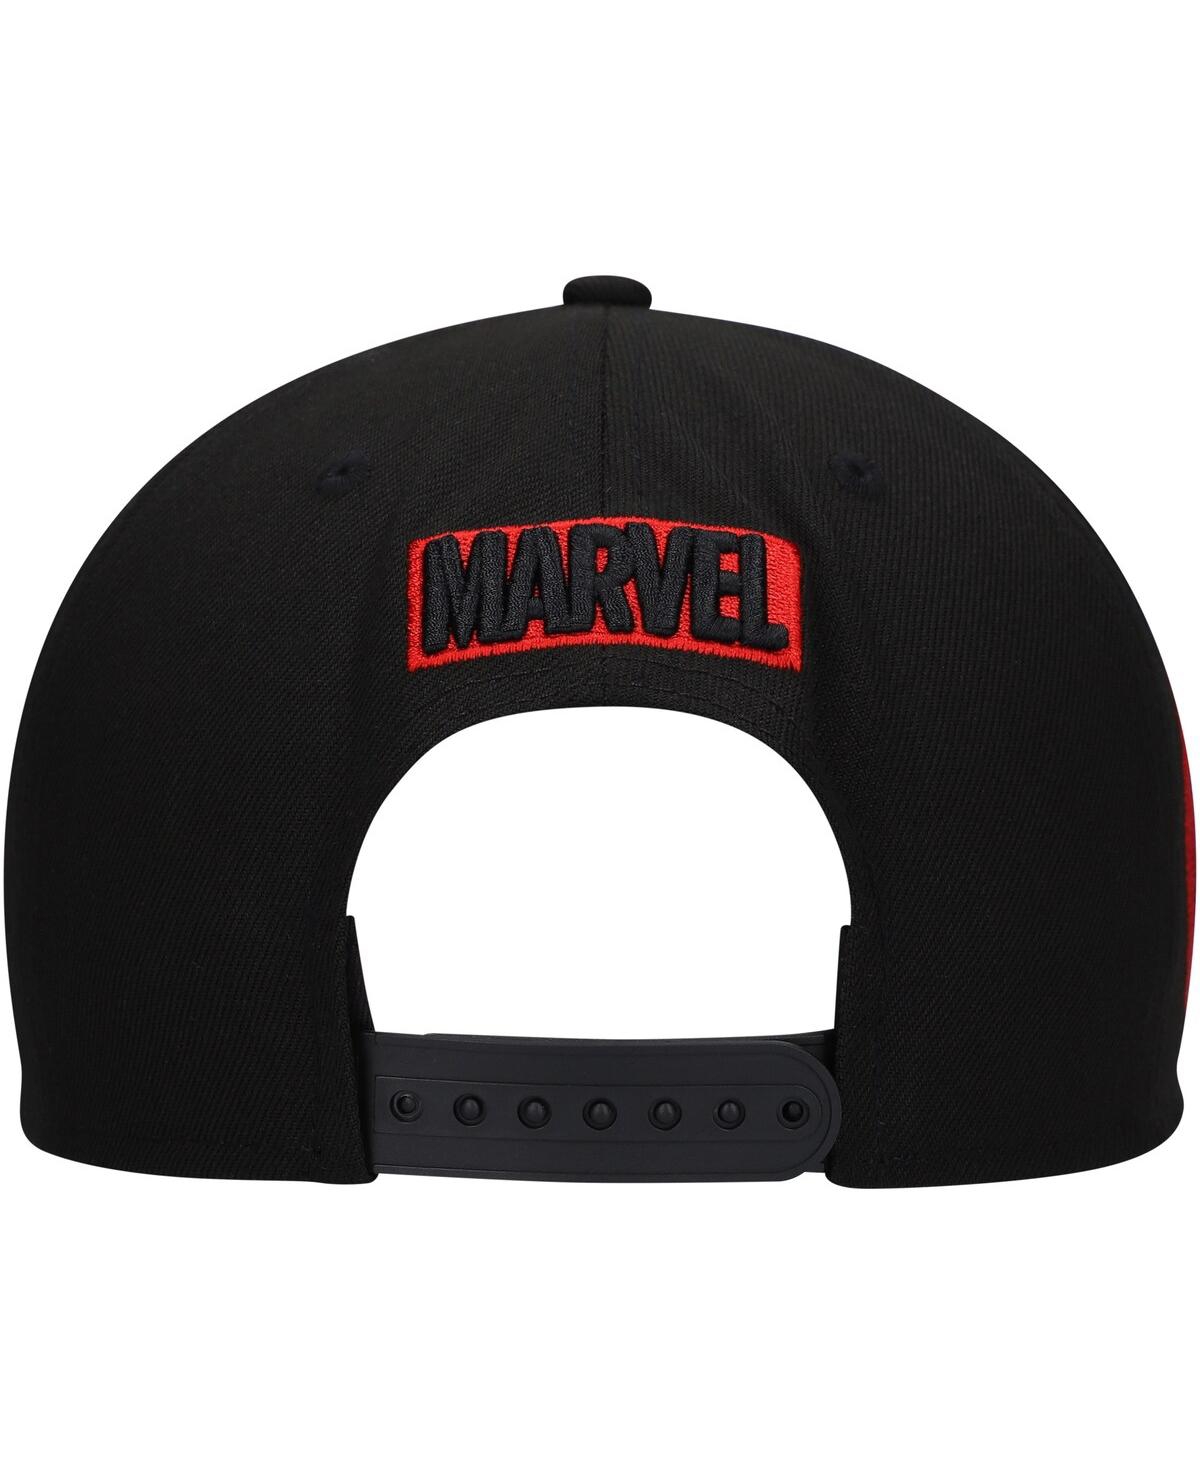 Shop Lids Men's Black Spider-man Elements Snapback Hat